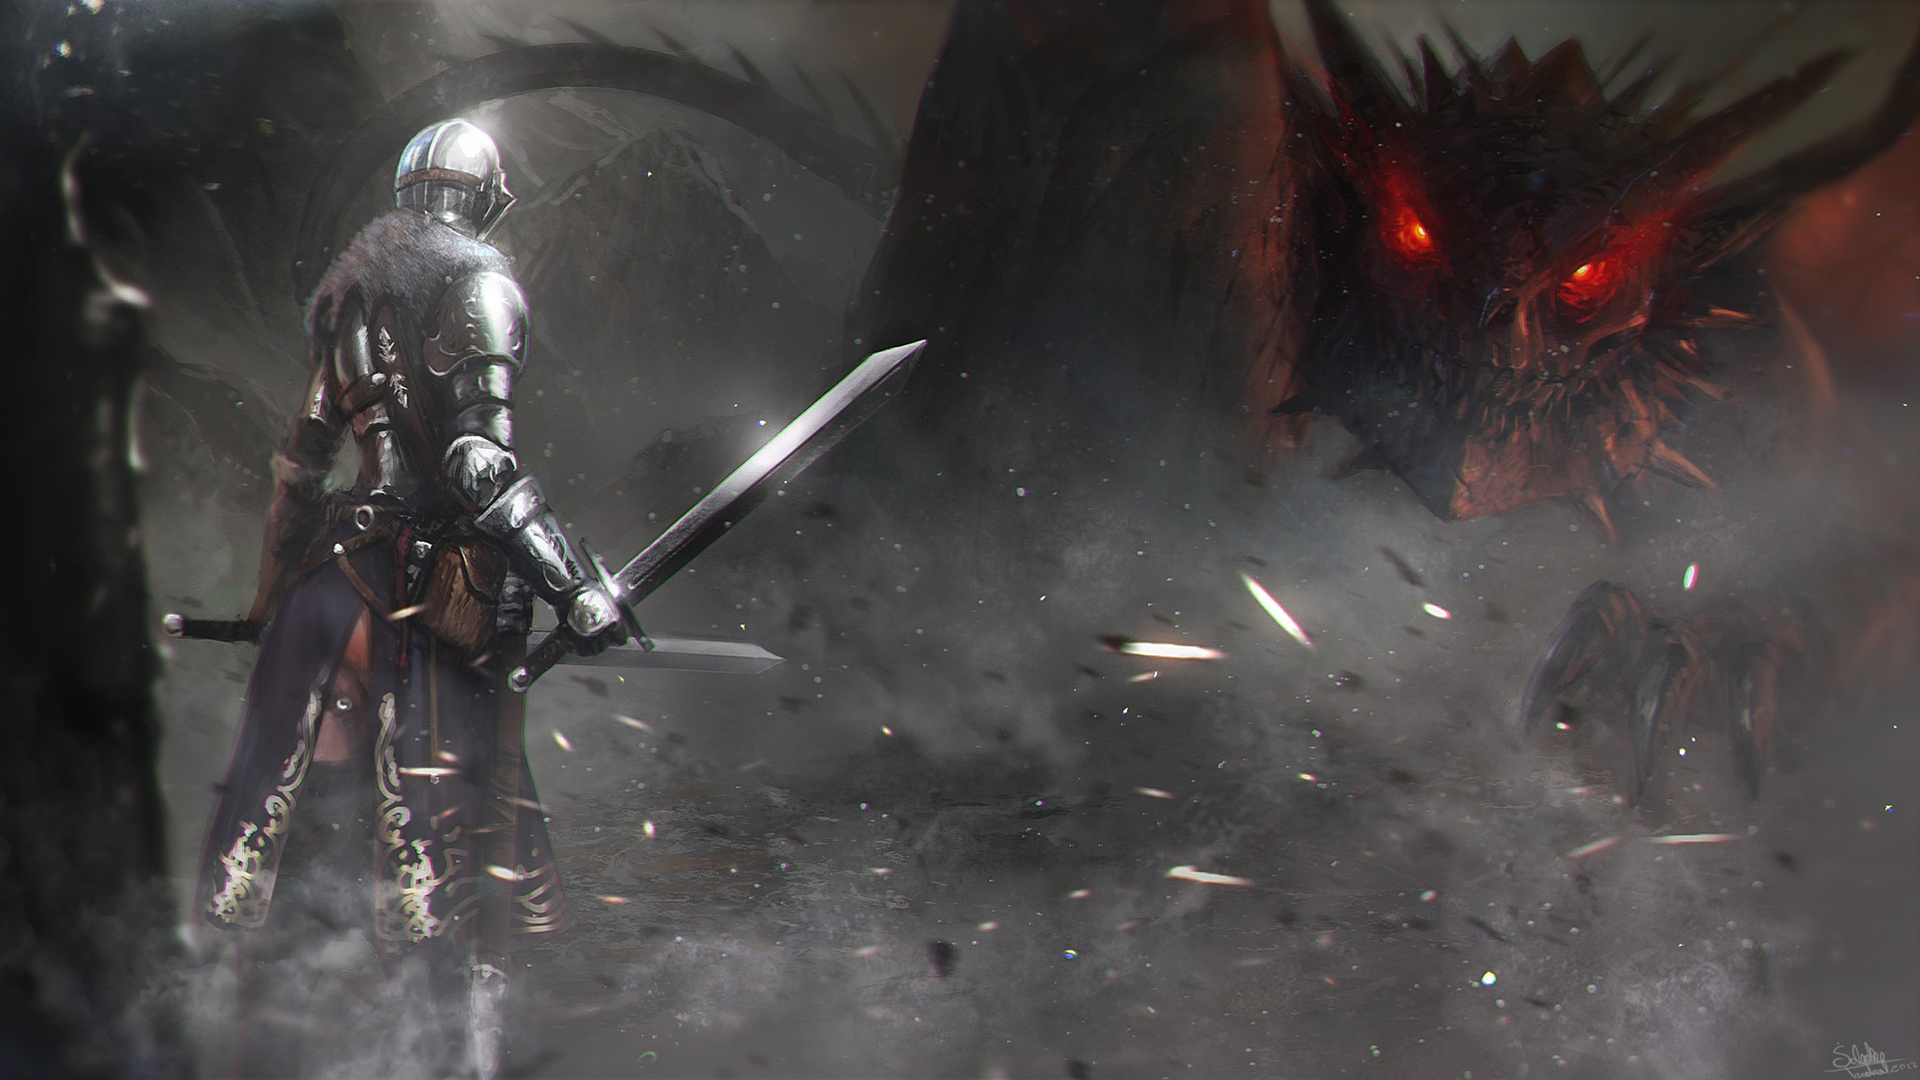 dark souls 2 II game dragon knight hd wallpaper image picture